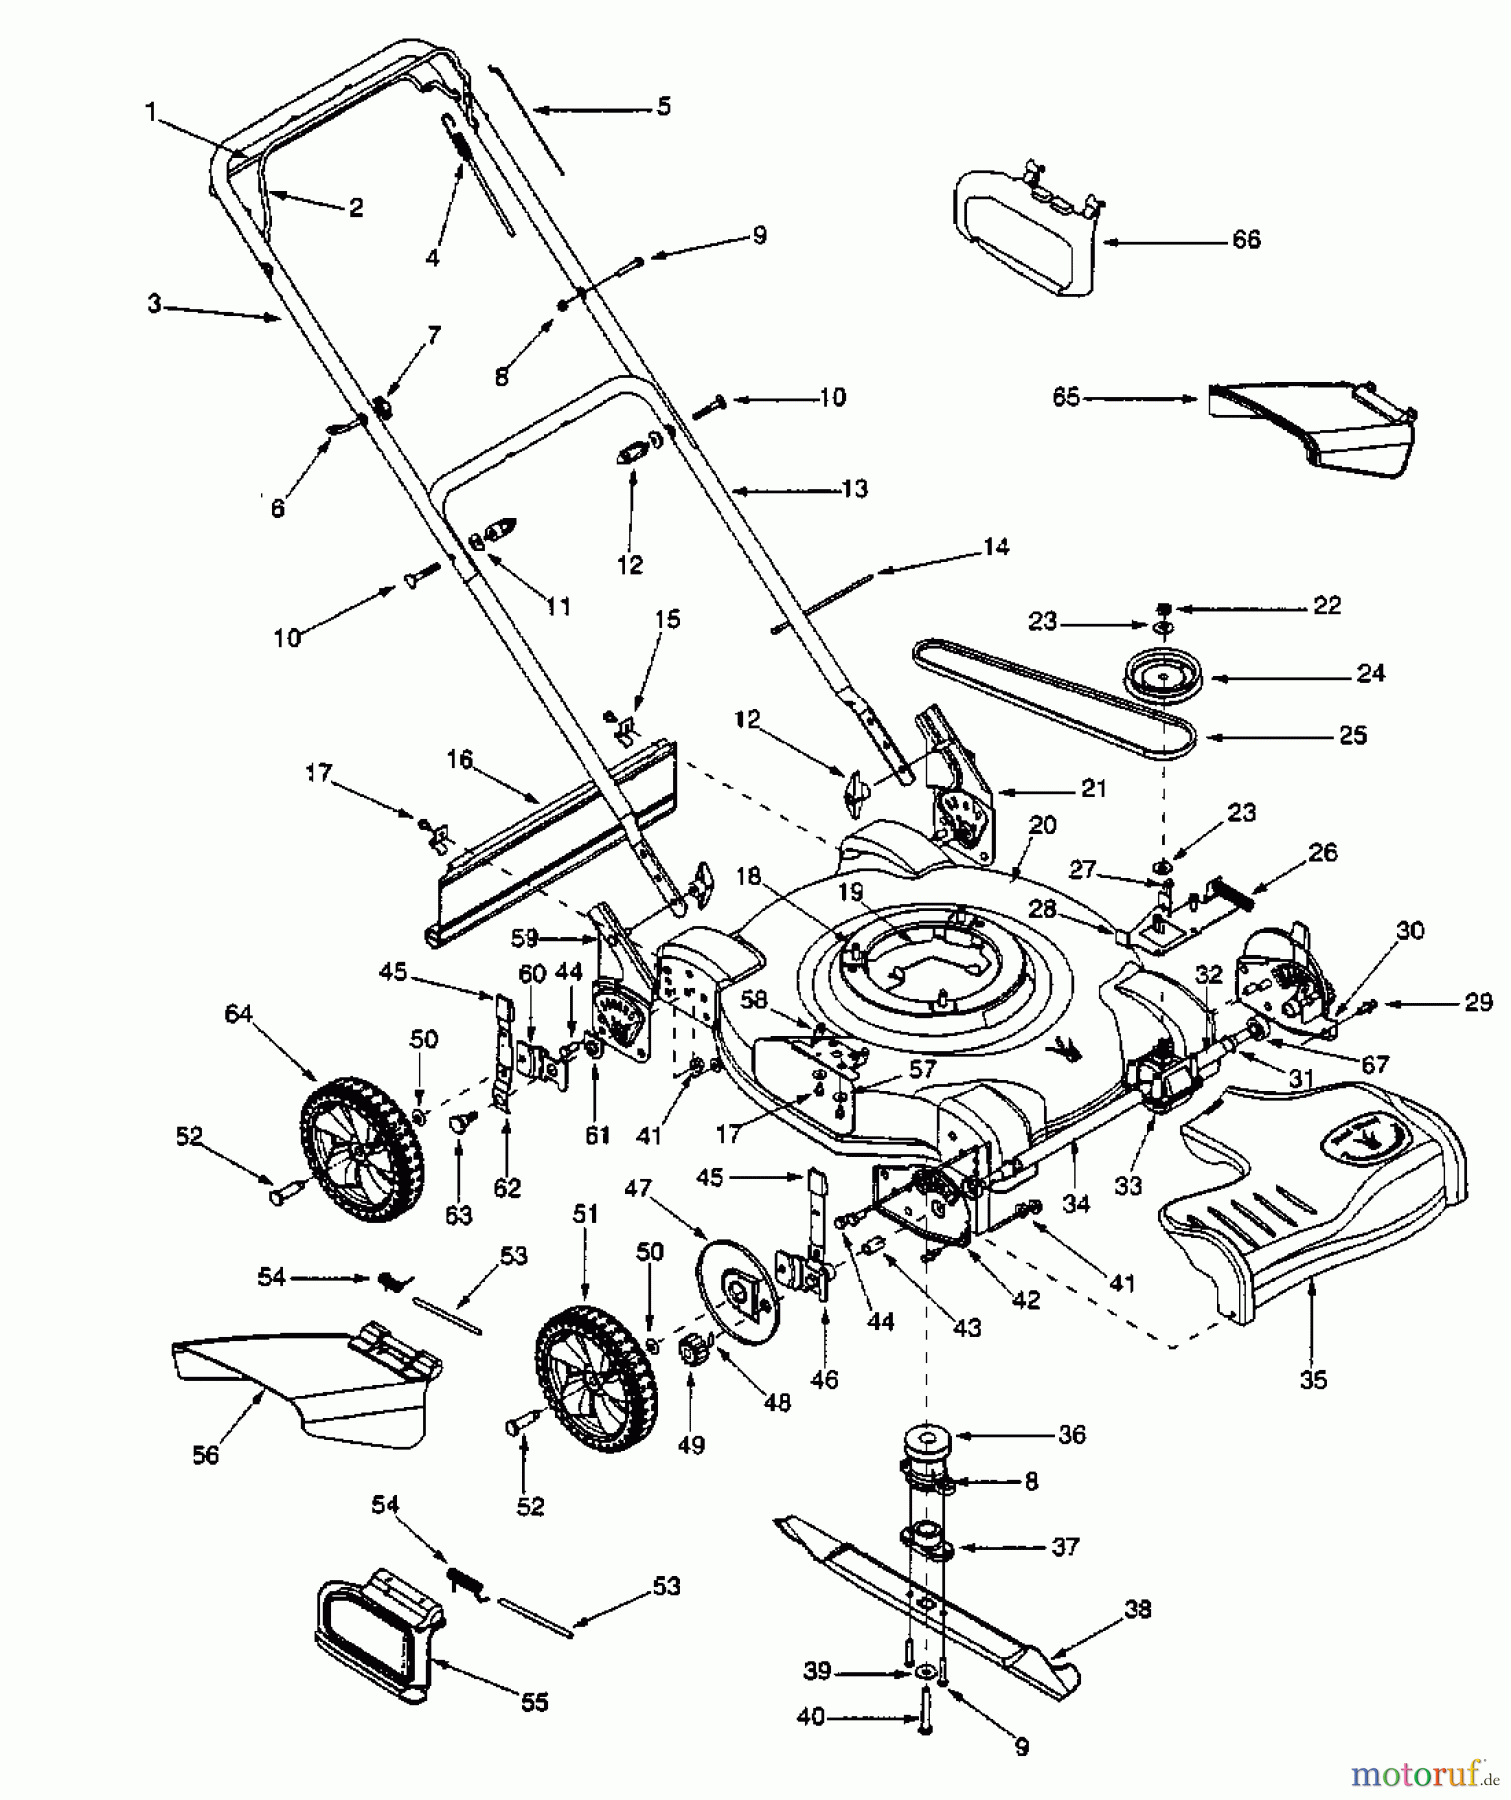  Mastercut Motormäher mit Antrieb GF 56 12A-264A659  (2000) Grundgerät